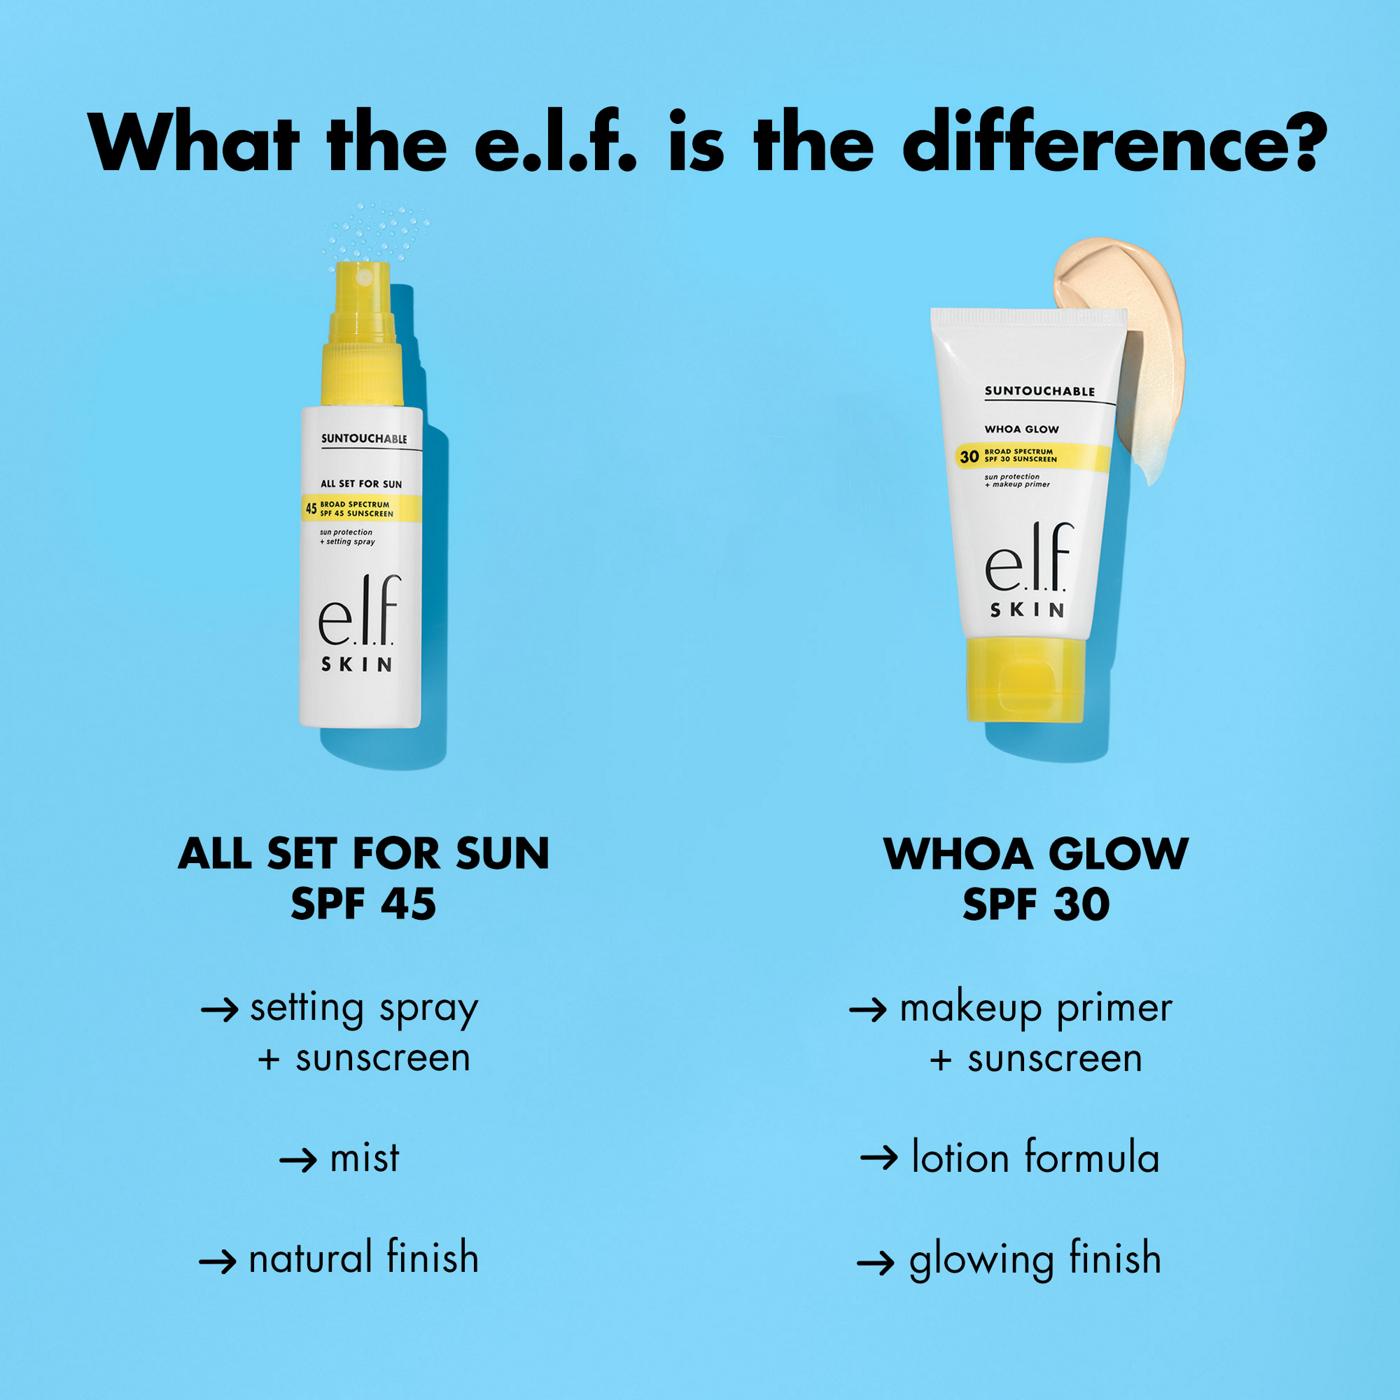 e.l.f. SKIN Suntouchable All Set For Sun Sunscreen SPF 45; image 7 of 12